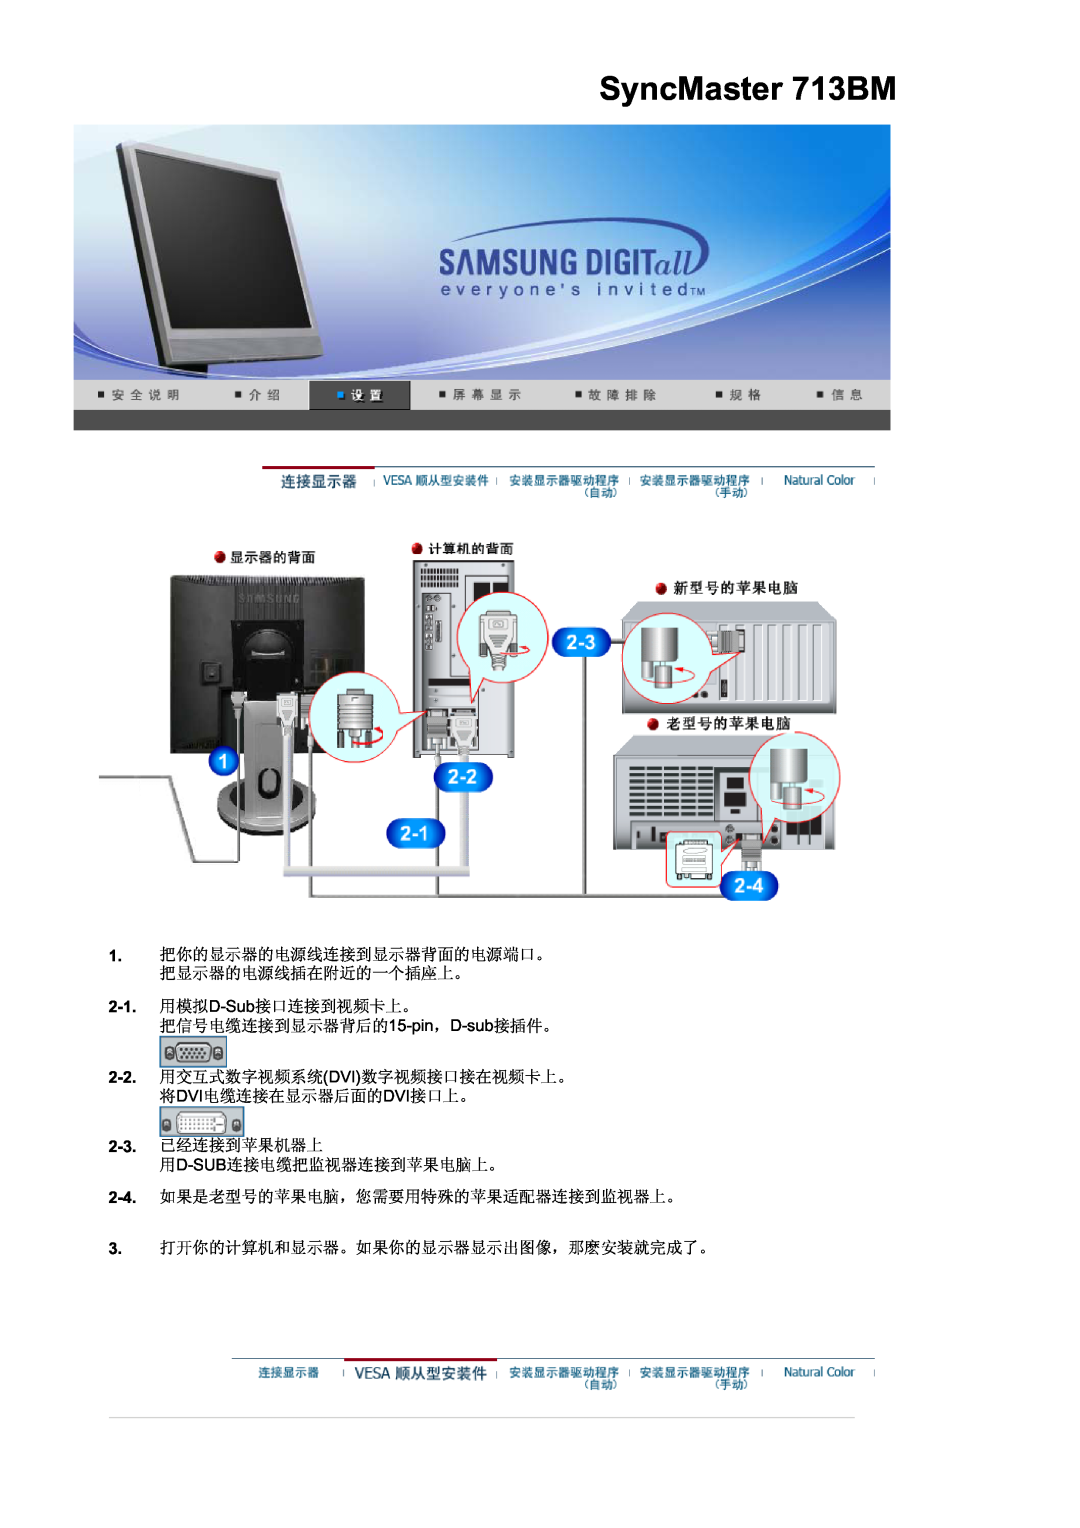 Samsung LS19MJSTSQ/EDC, LS17MJSTSE/EDC, LS19MJSTS7/EDC, MJ19MSTSQ/EDC, MJ17MSTSQ/EDC manual SyncMaster 713BM, D-Sub, 2-2.DVI 